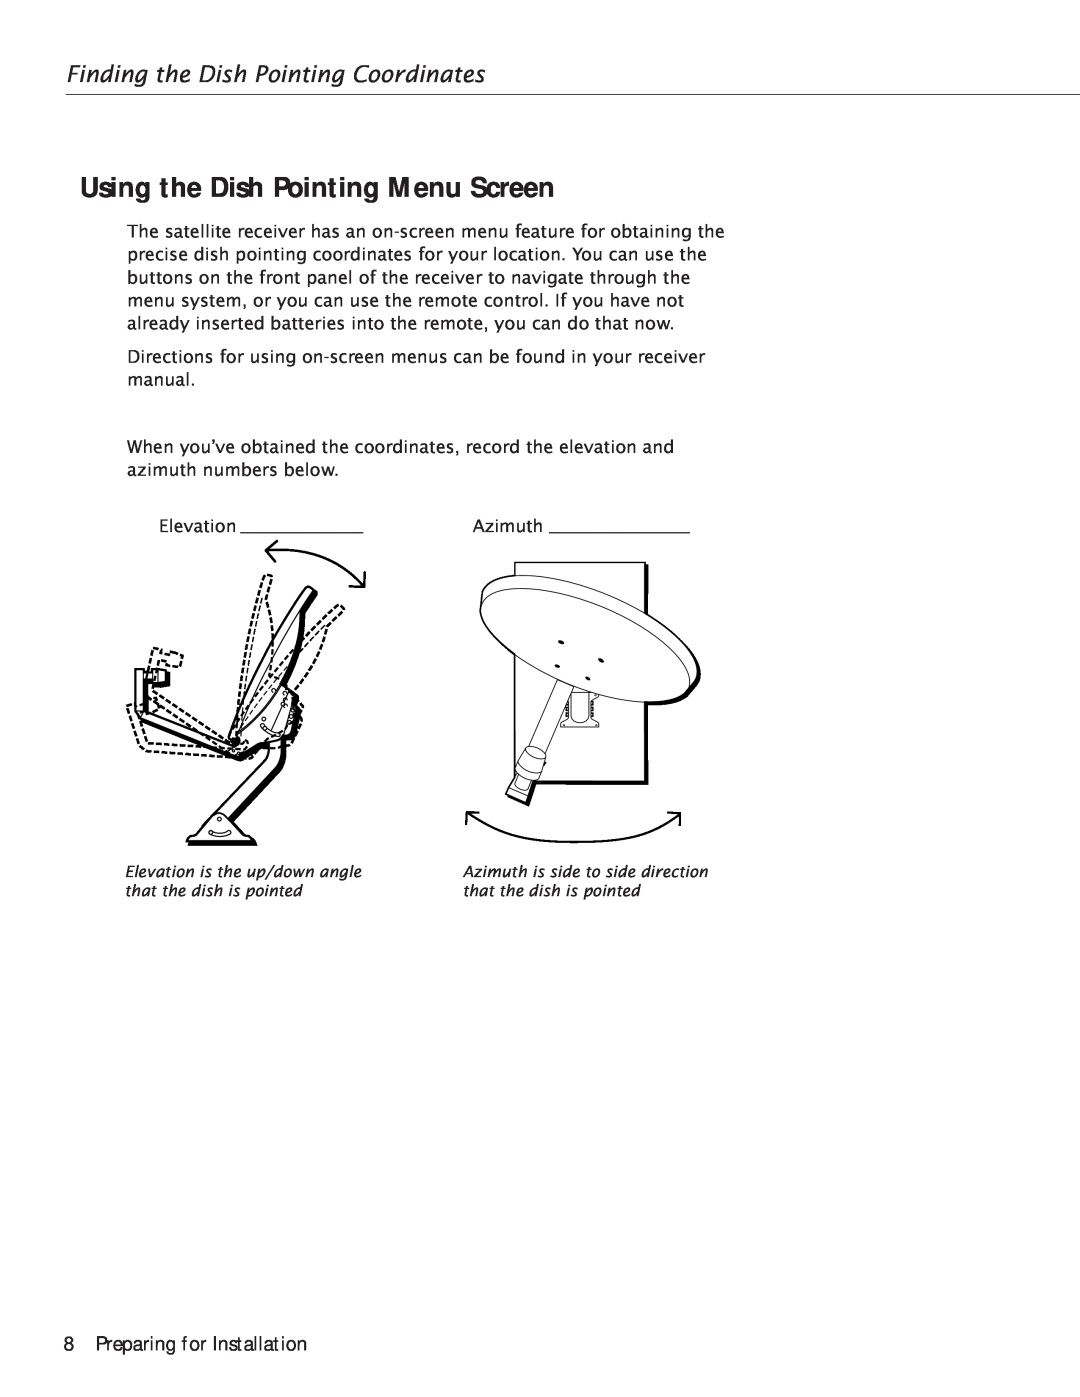 RCA Satellite TV Antenna manual Using the Dish Pointing Menu Screen, Preparing for Installation 